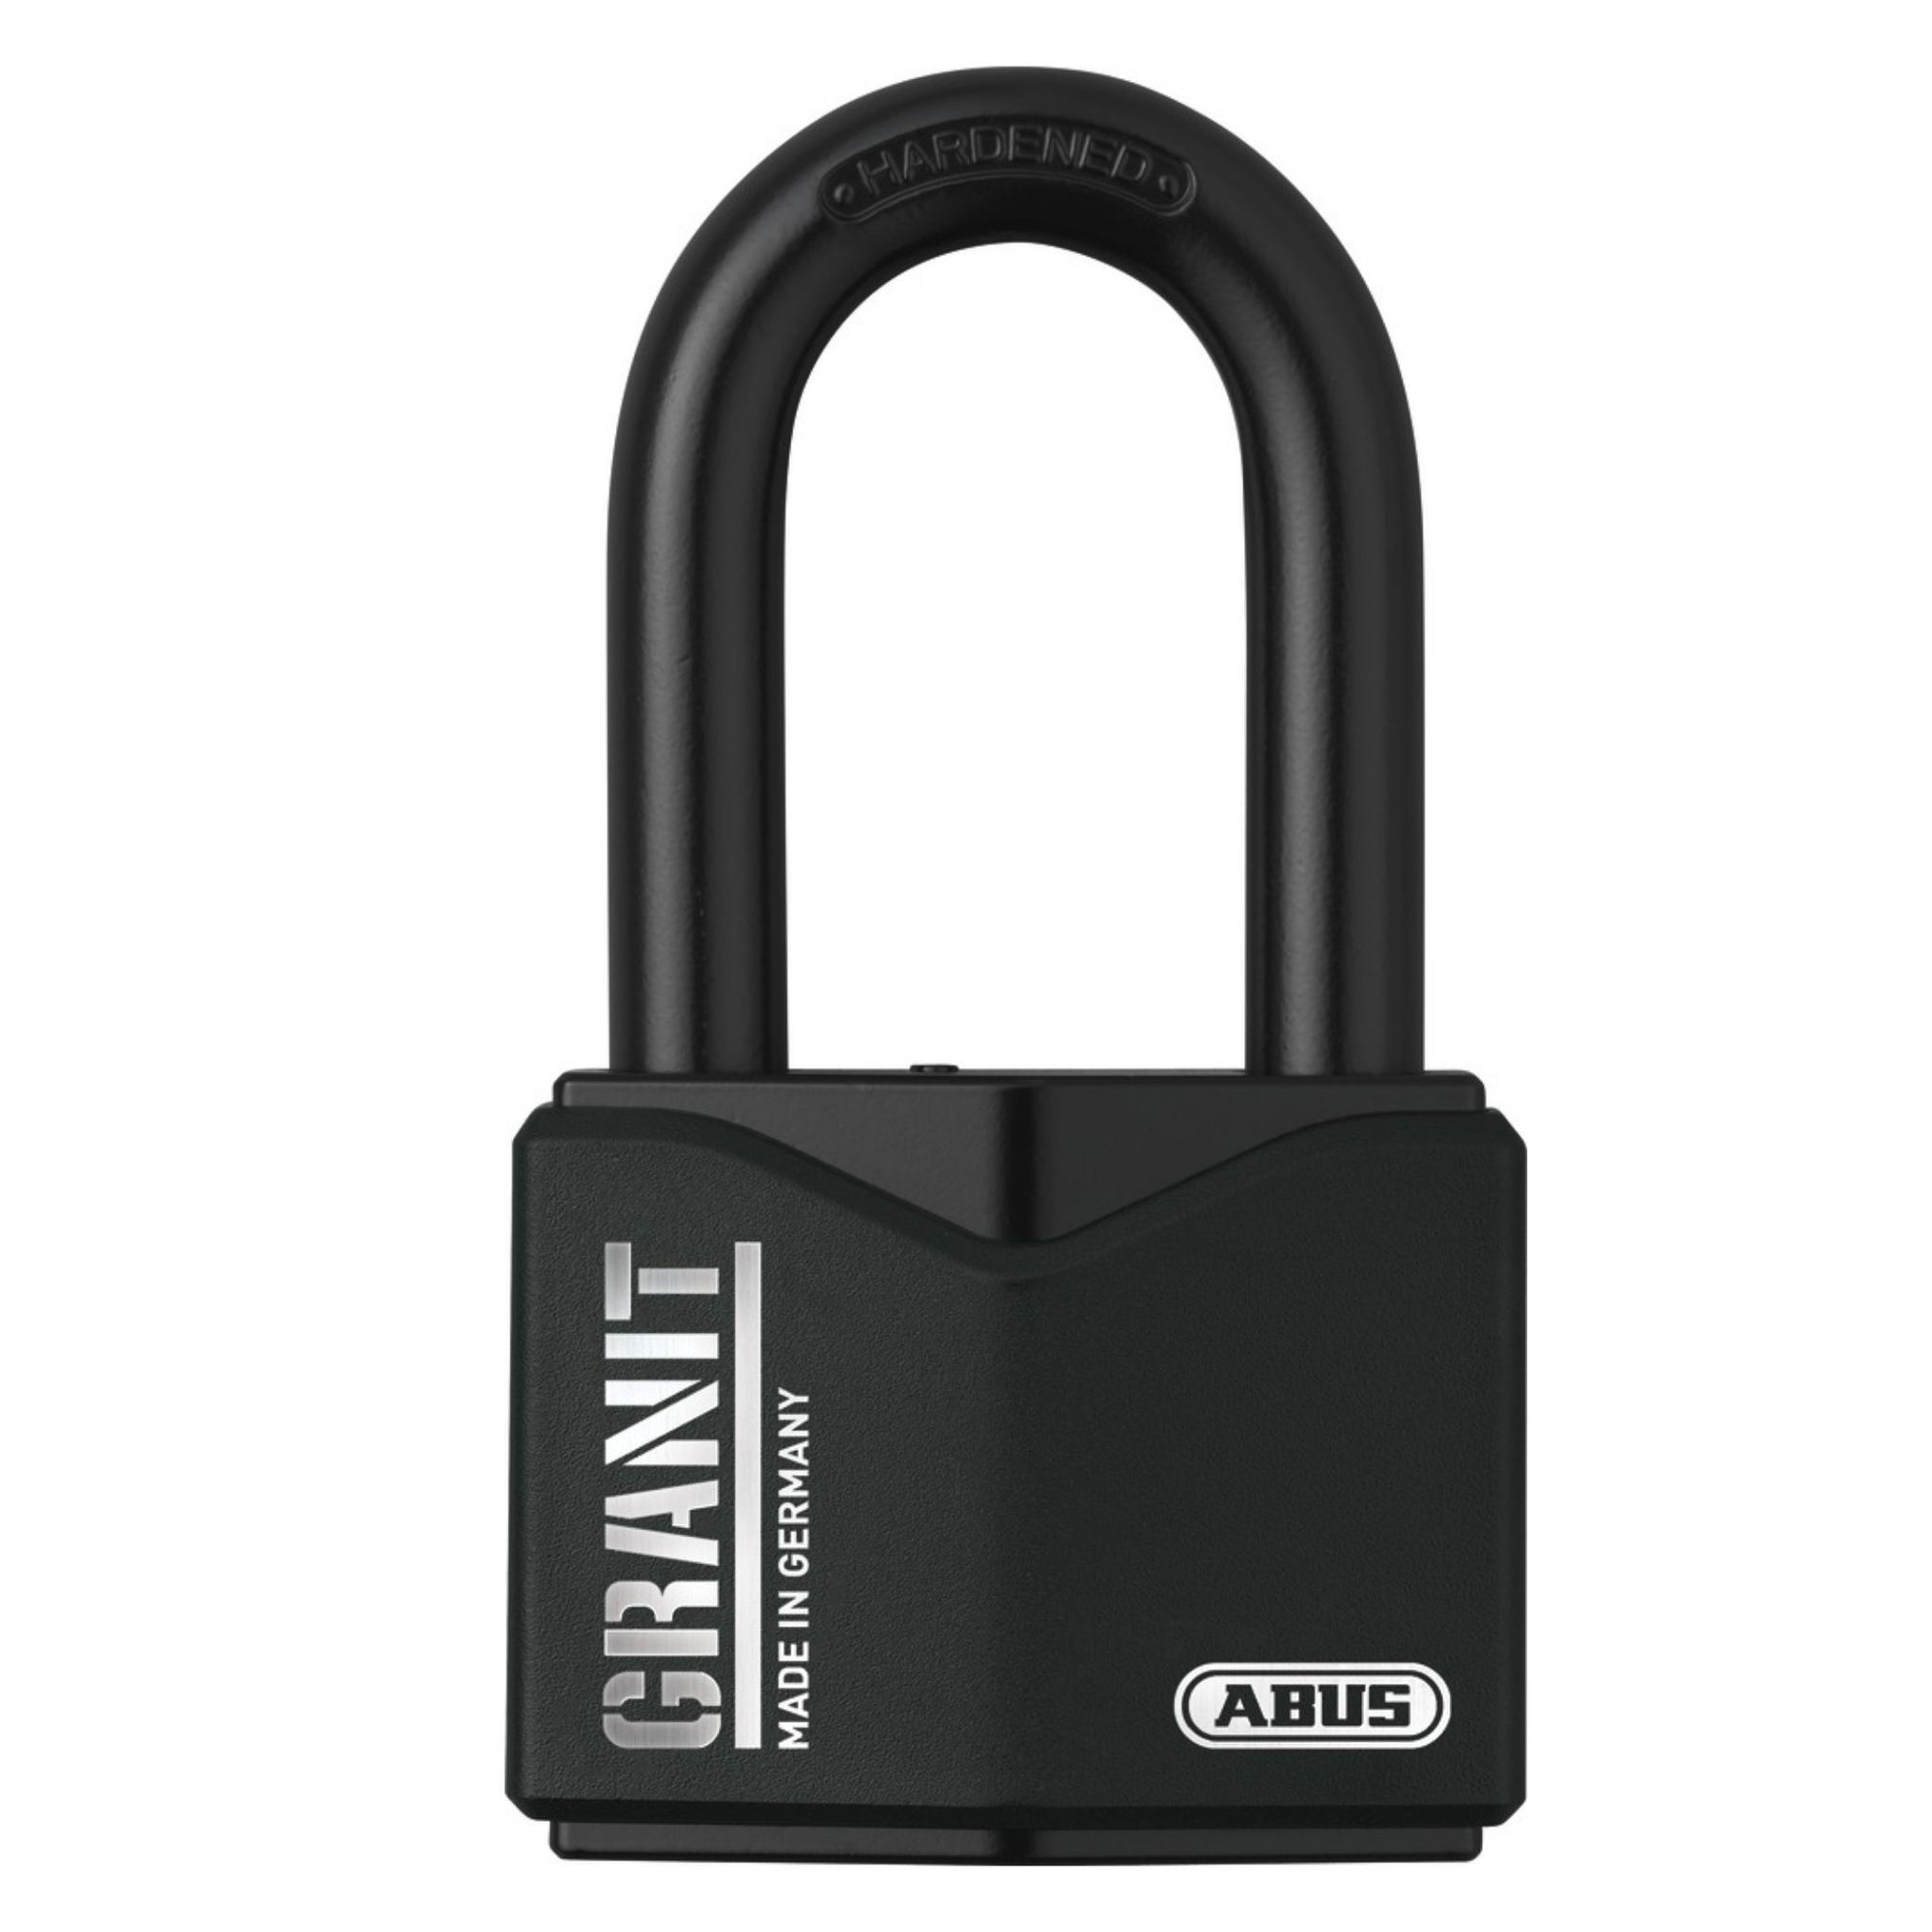 Abus 37RK/55HB50 KA 5544653 Granit Padlock Keyed Alike Locks with 2" Shackle Match to Existing Key# KA5544653 - The Lock Source